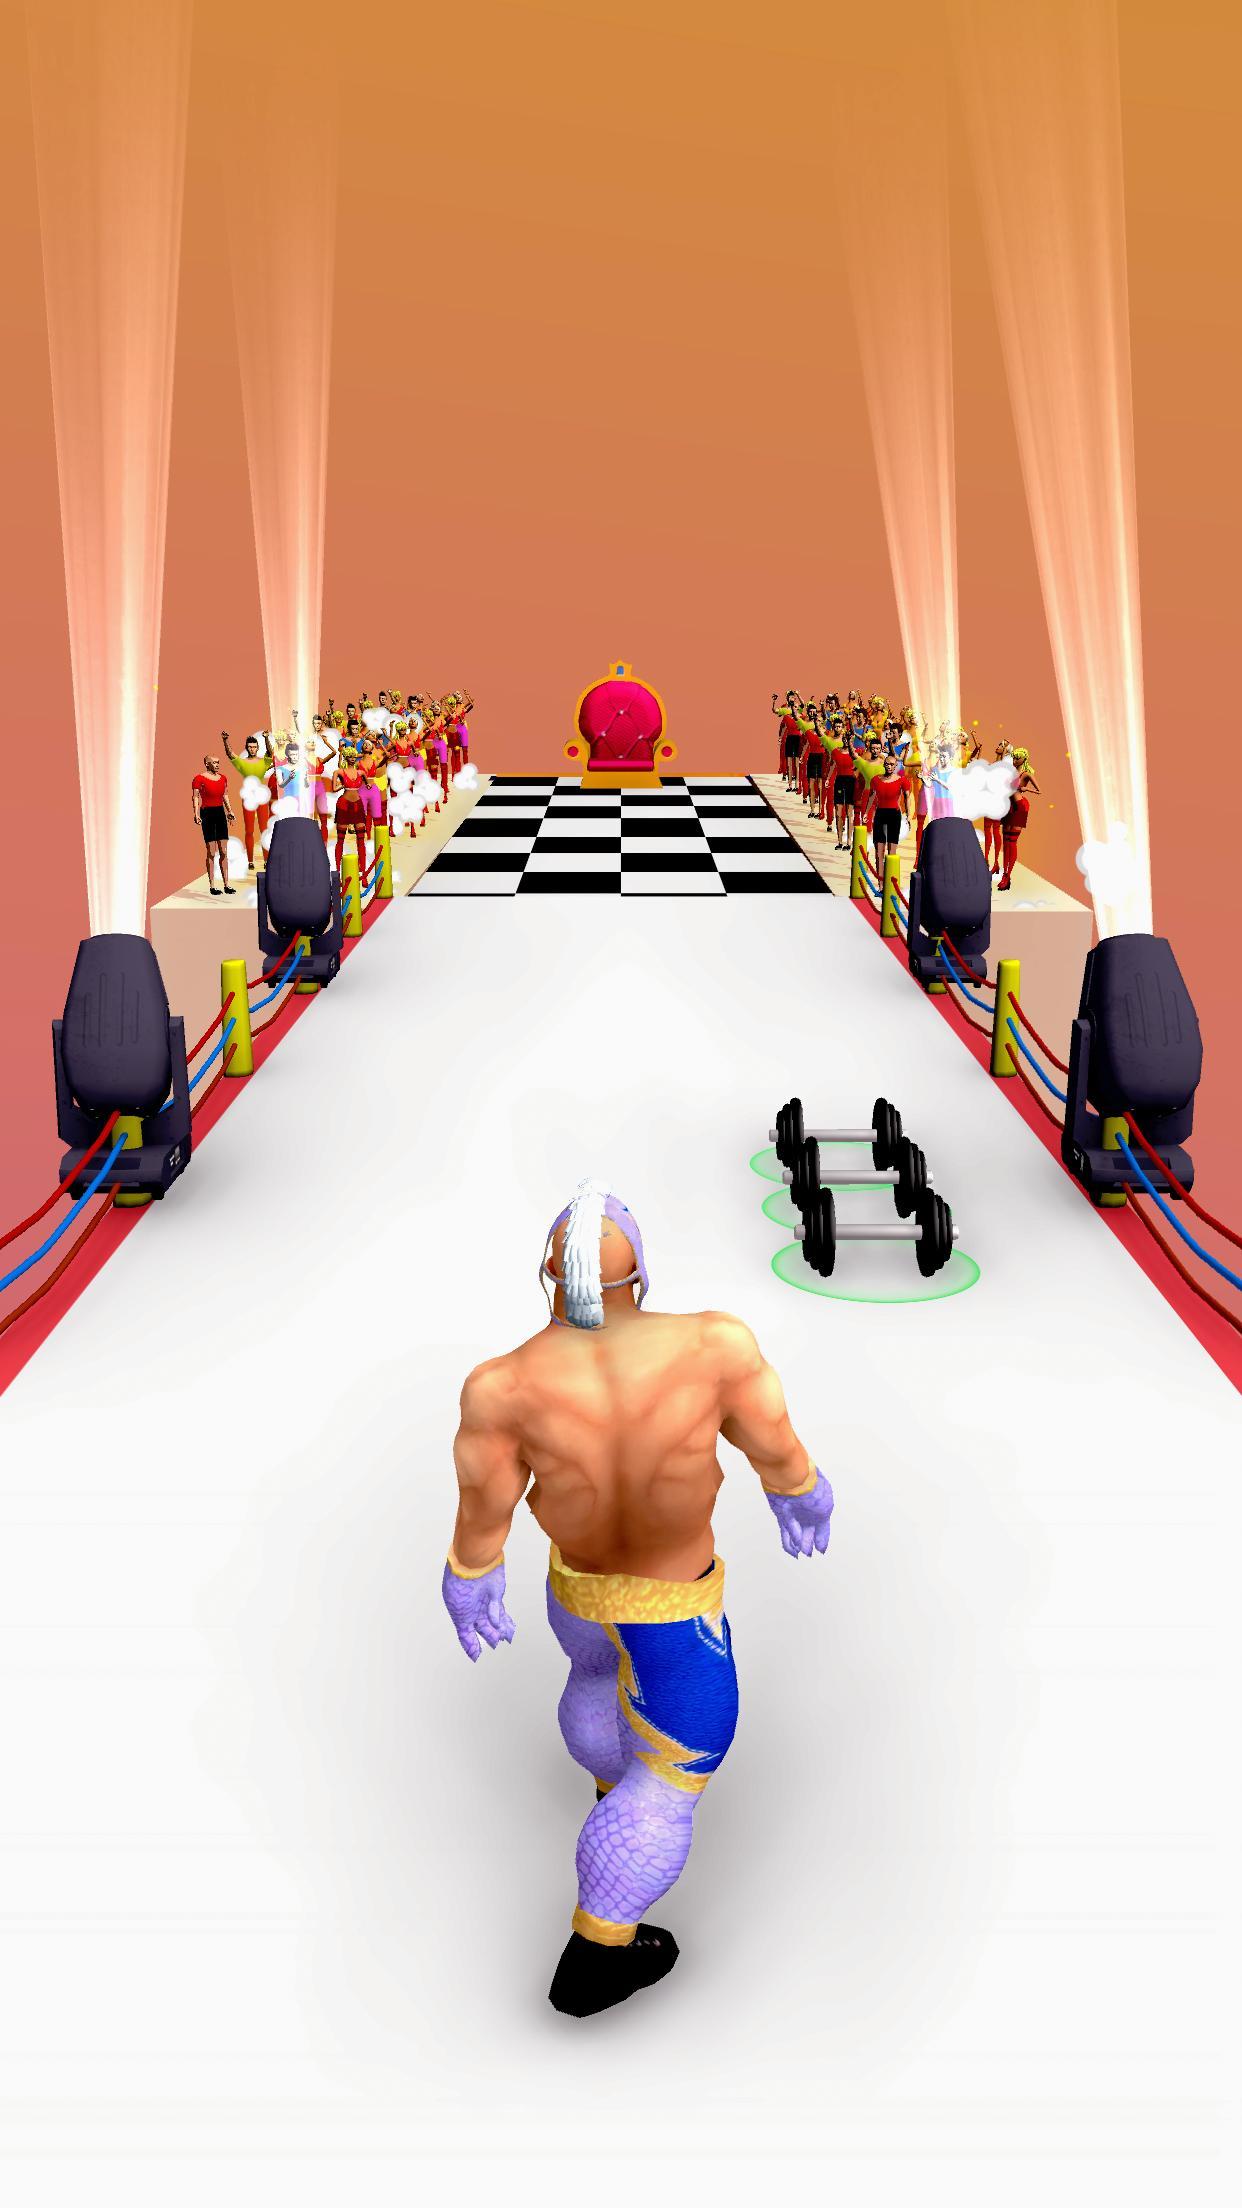 Screenshot of Wrestling Trivia Run